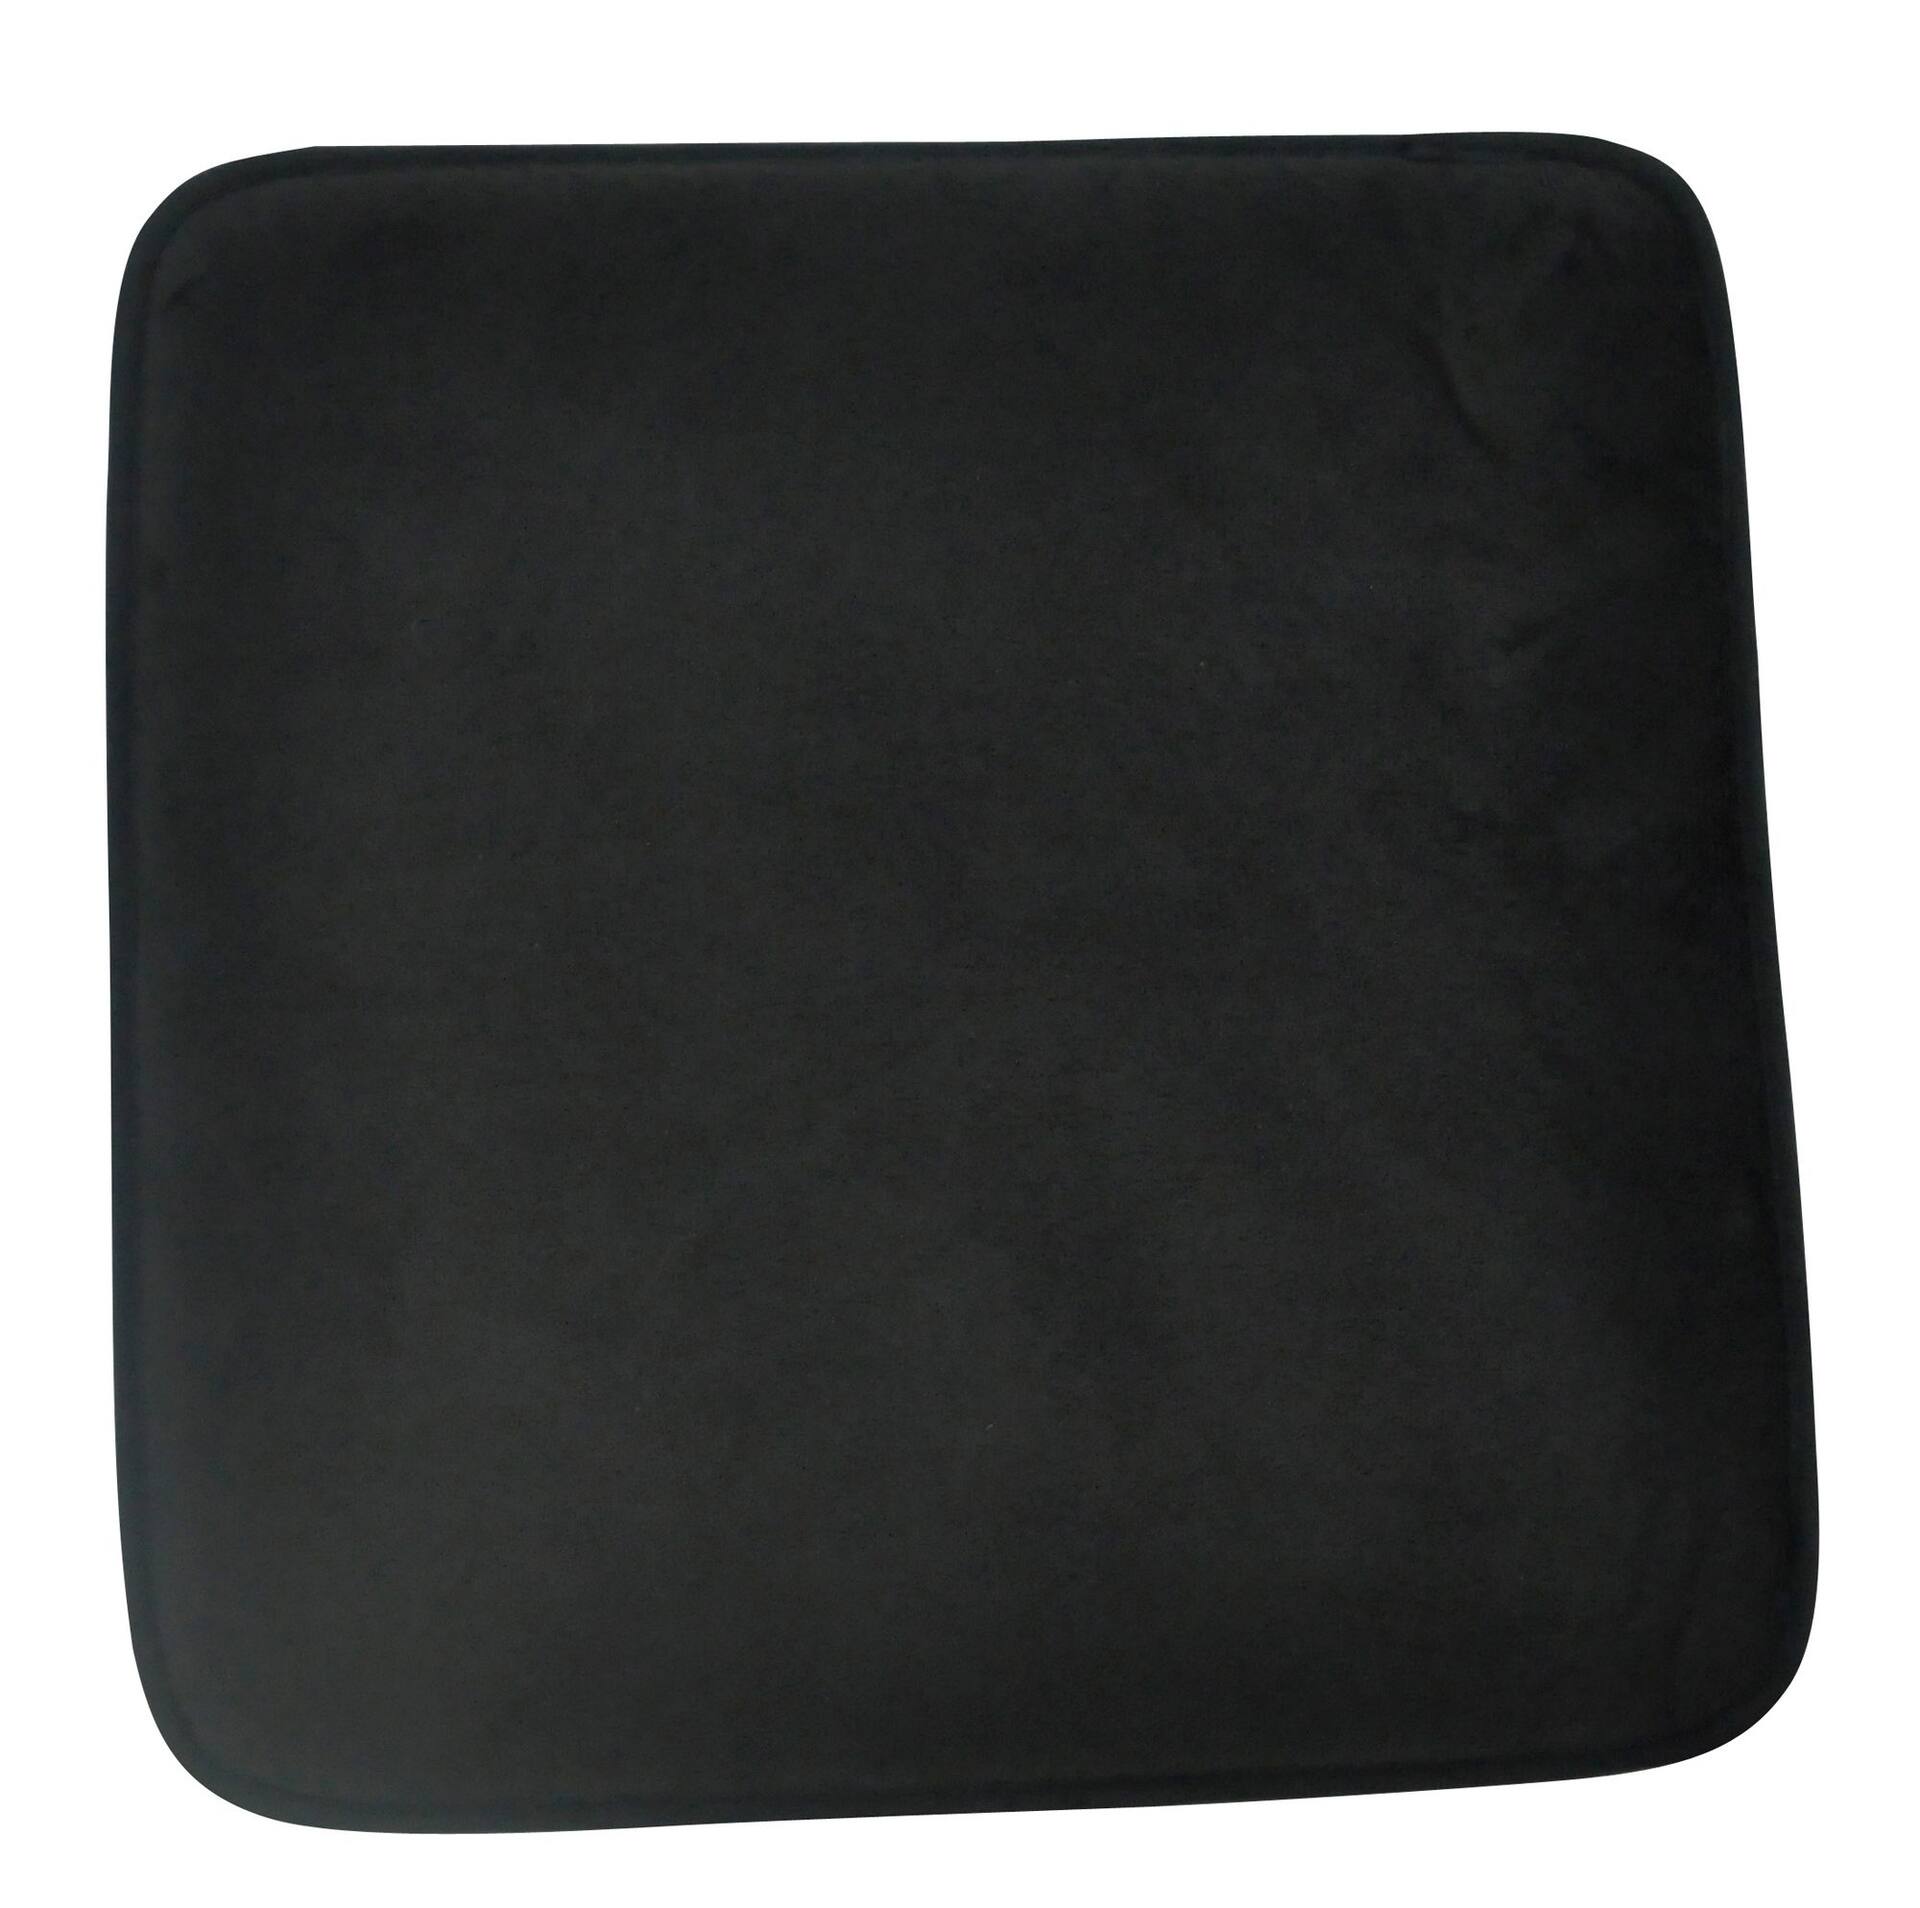 AutoTrends Gel Memory Foam Lumbar Back Support Cushion, Universal Fit